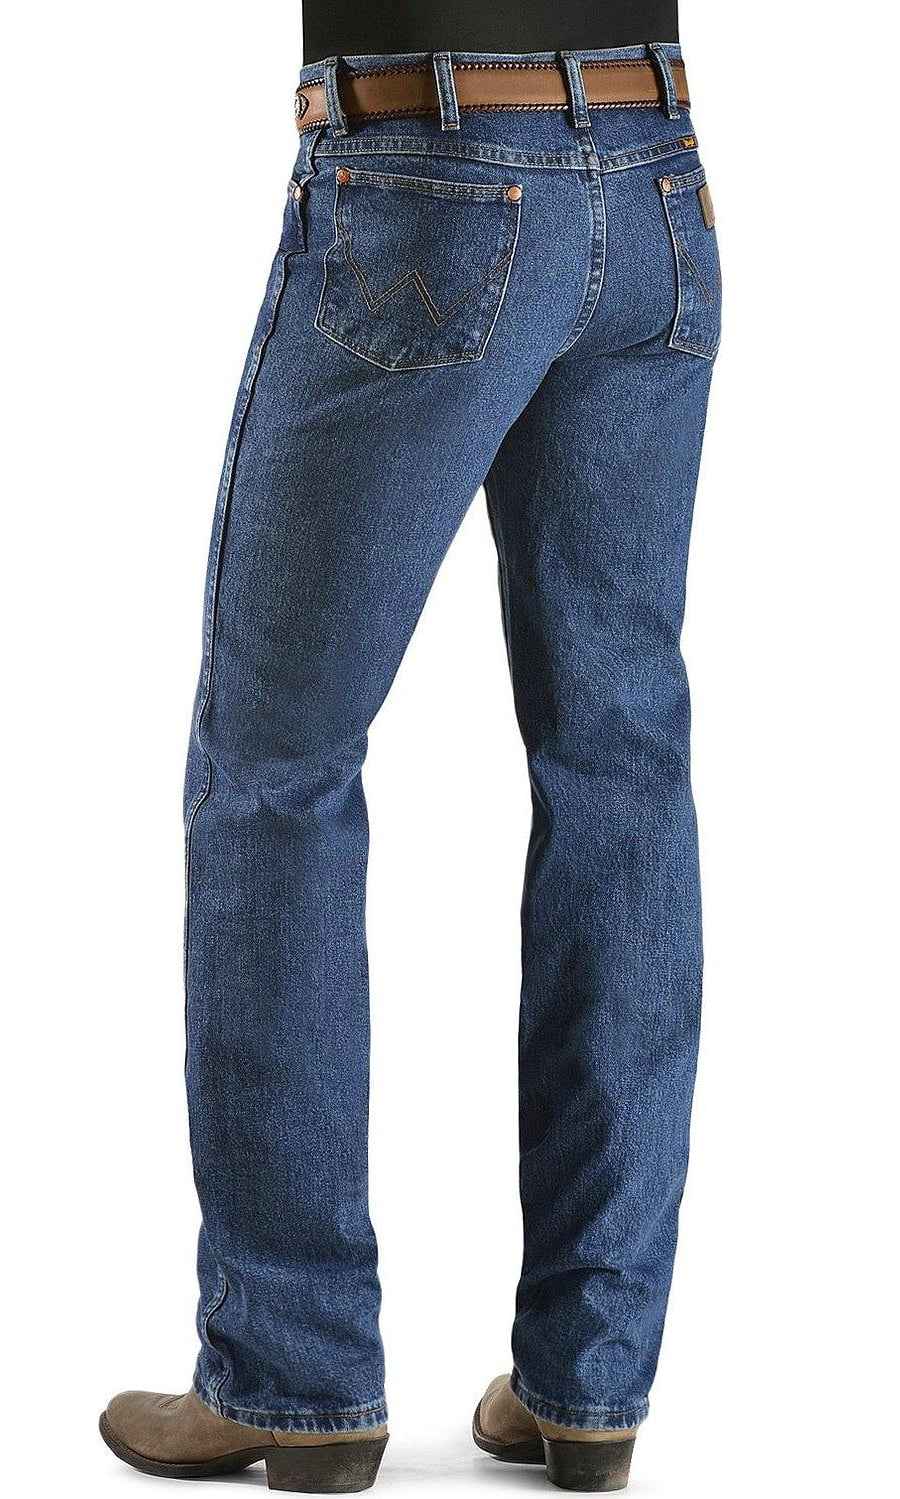 Wrangler Men's Cowboy cut Slim Fit Jean,dark stone,34x36 